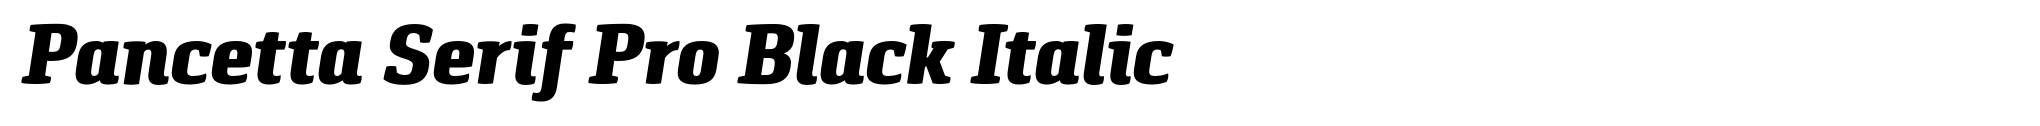 Pancetta Serif Pro Black Italic image